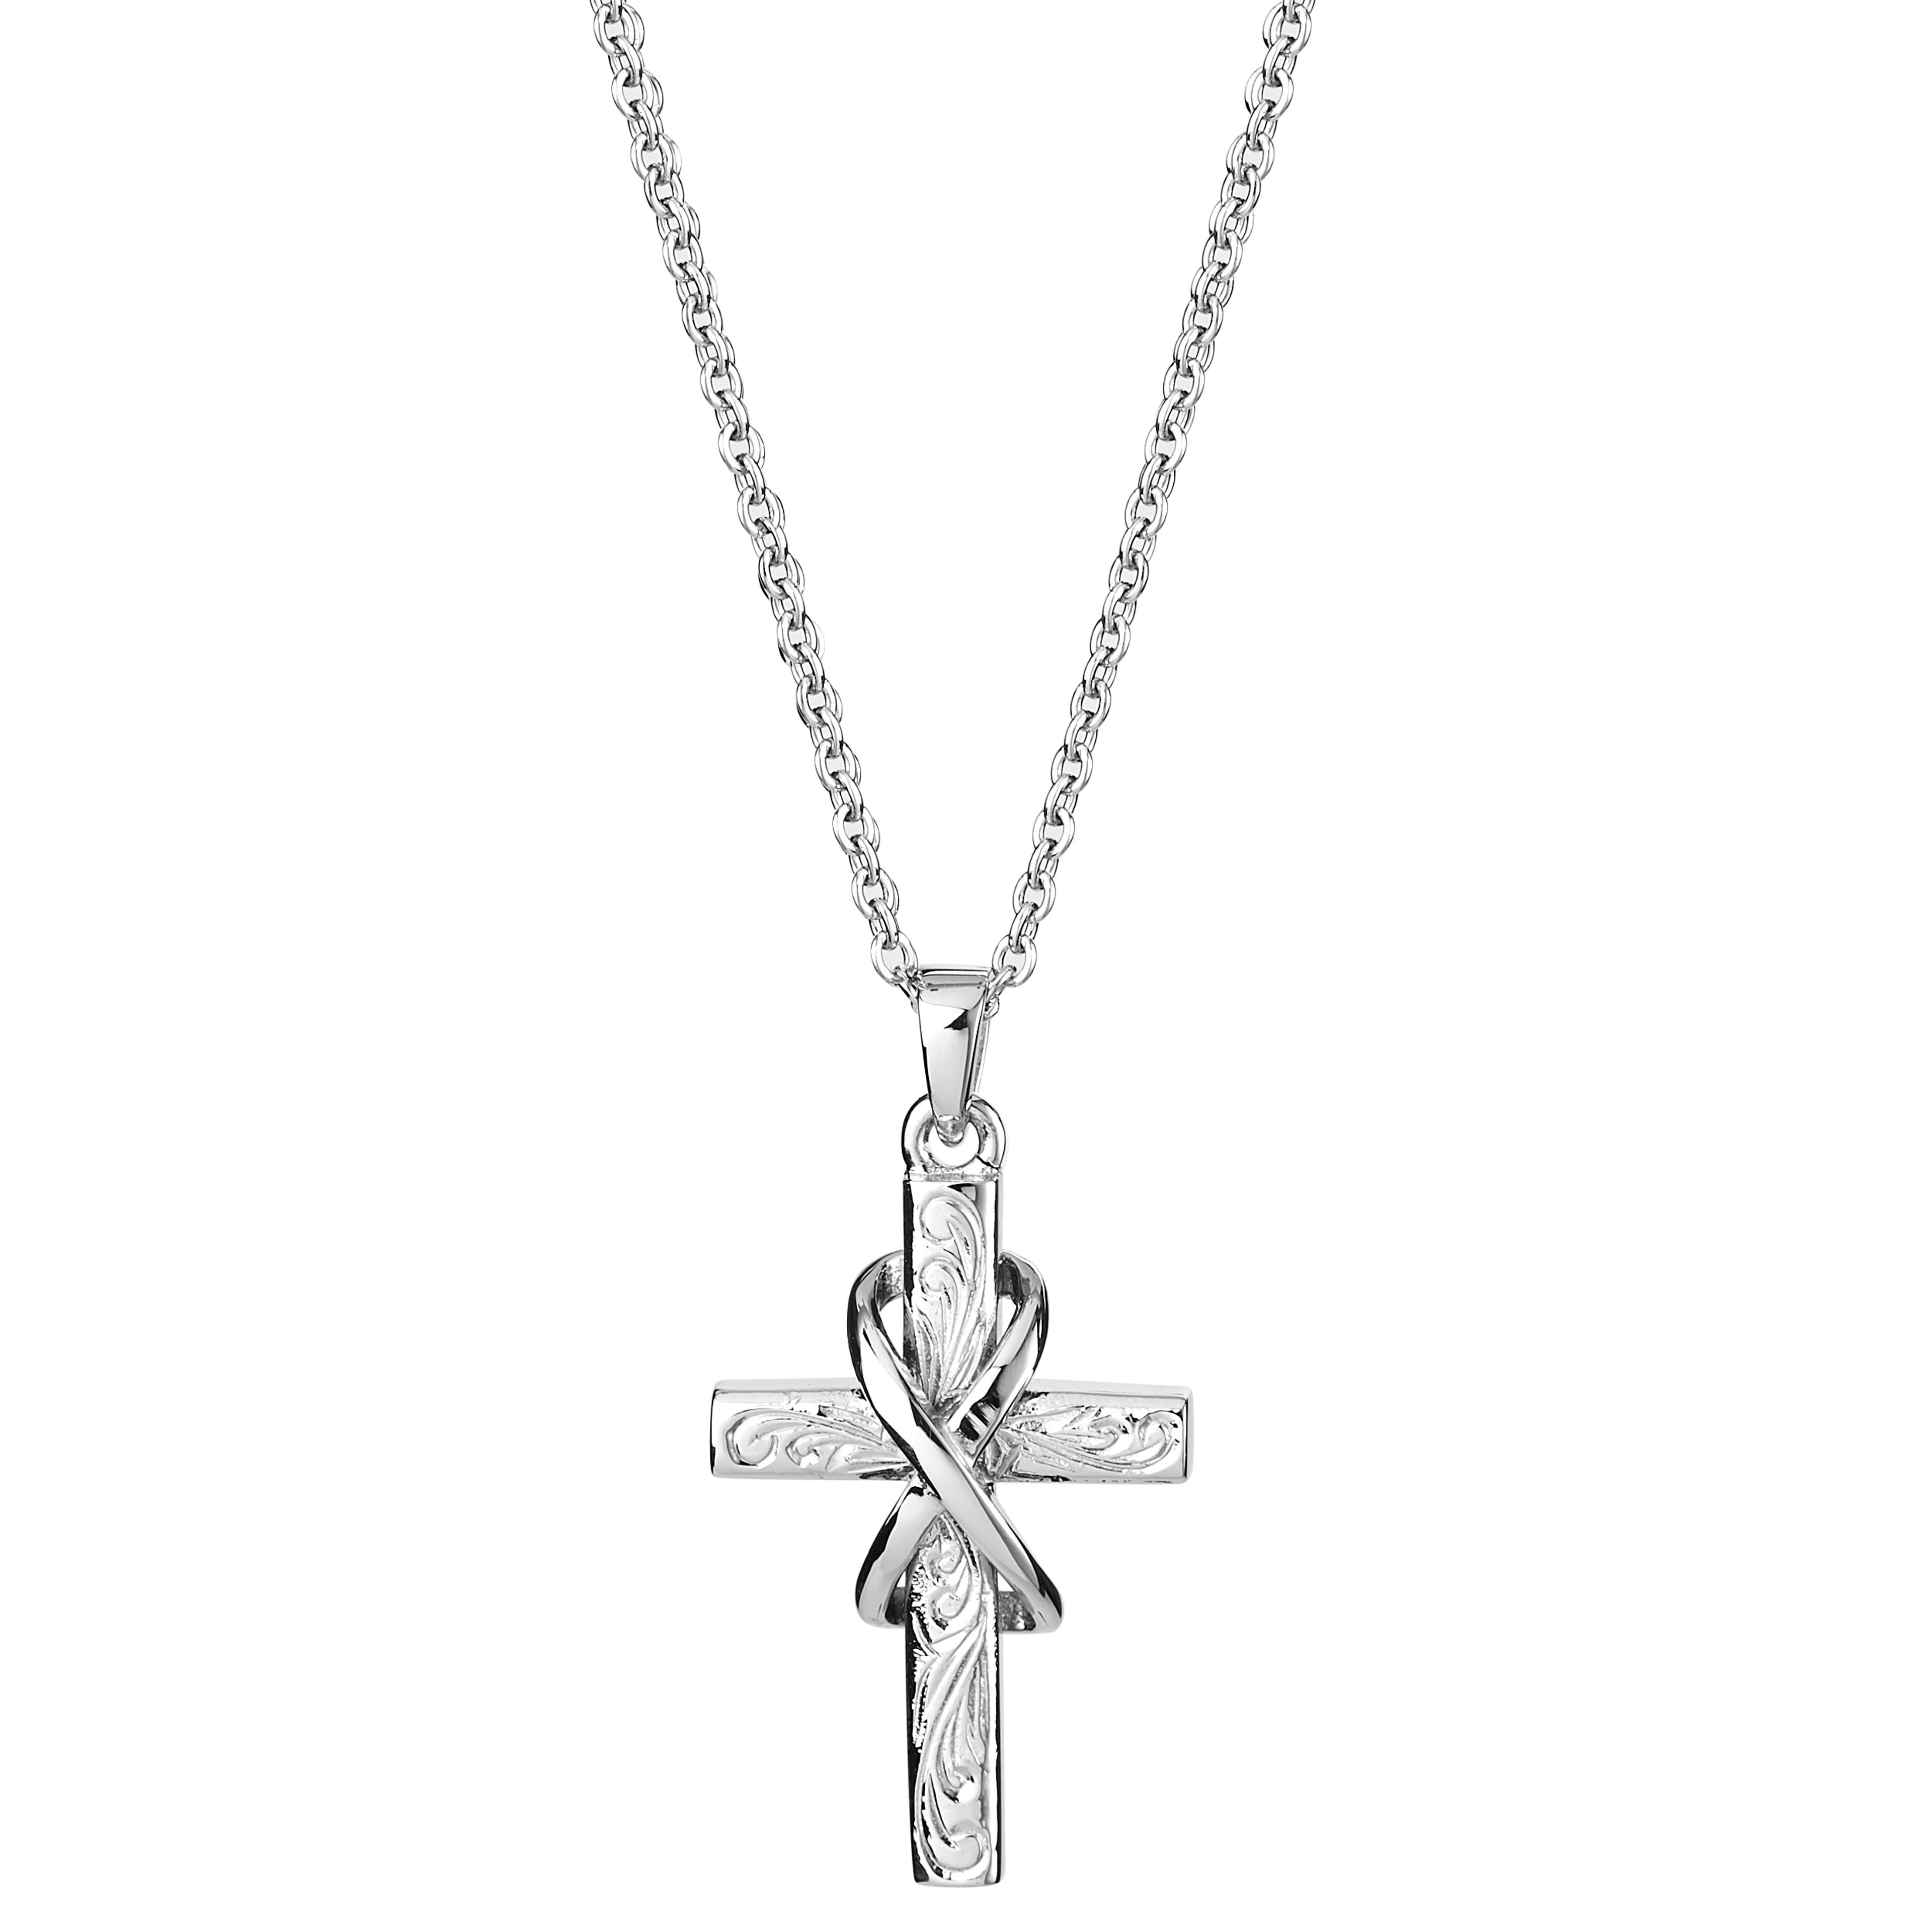 Silver-Tone Cross & Infinity Symbol Necklace